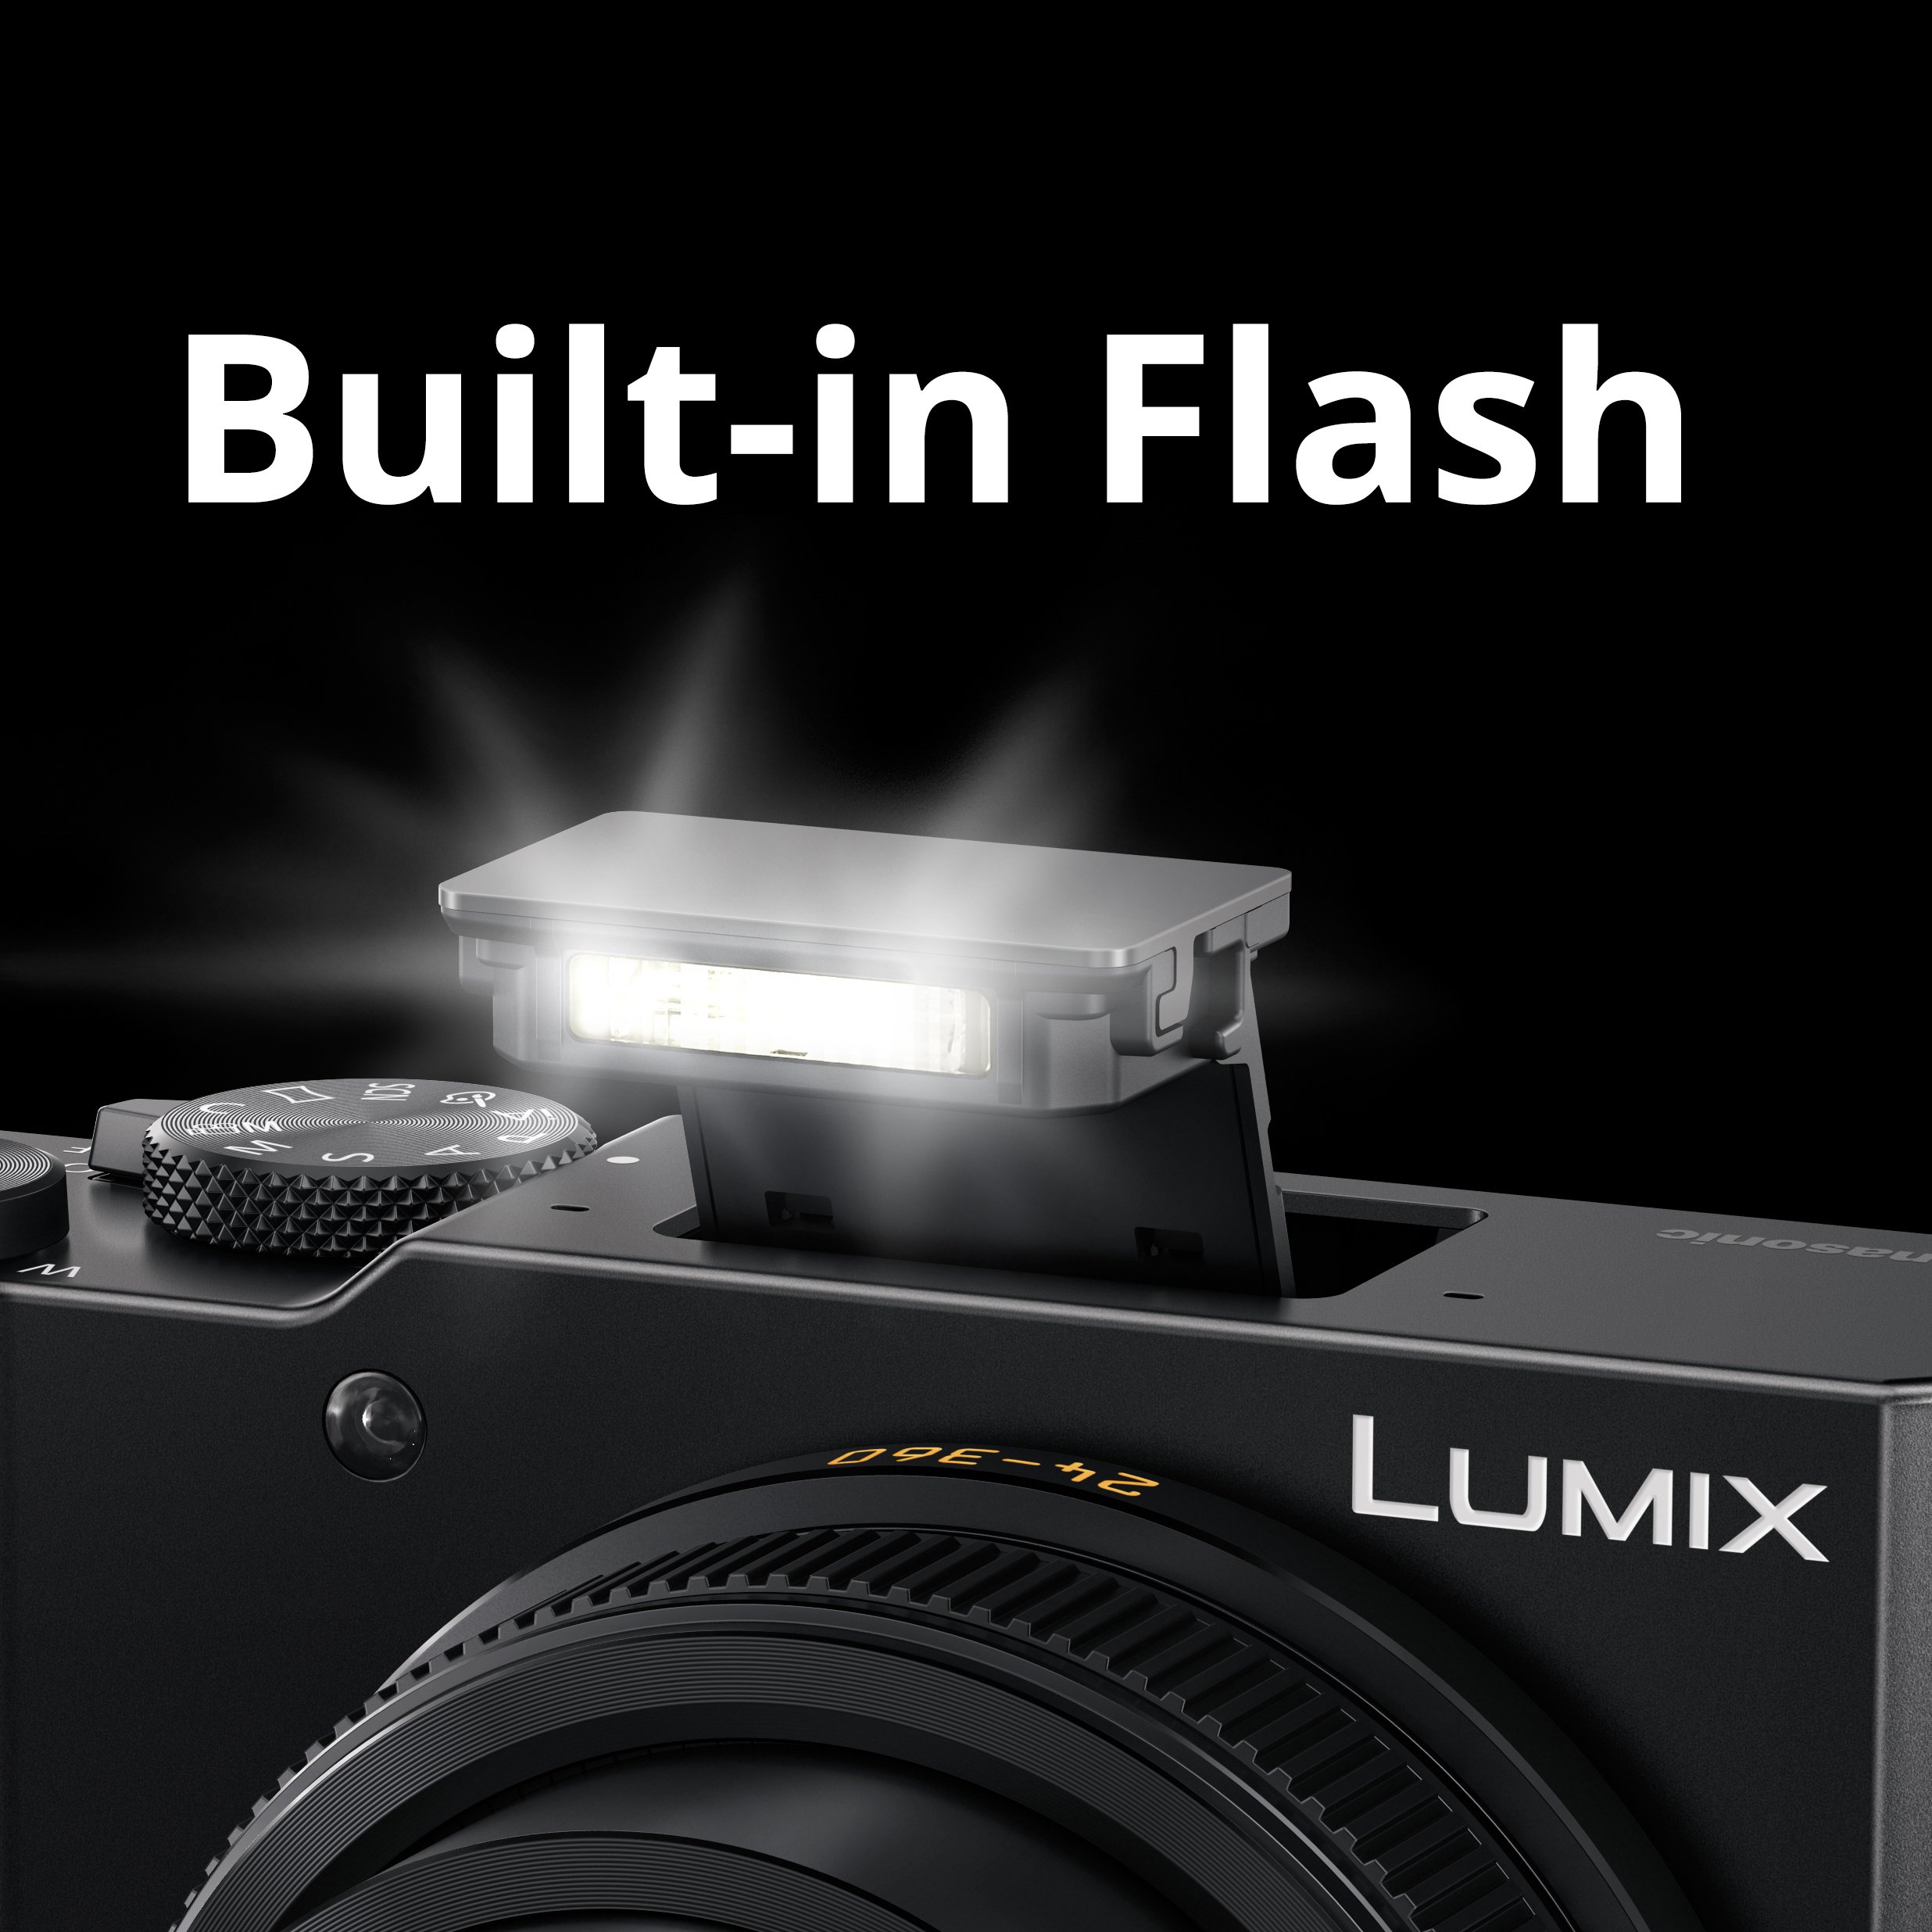 PANASONIC LUMIX ZS200 4K Digital Camera, DC-ZS200K, 20.1 Megapixel 1-Inch Sensor, 15X LEICA DC VARIO-ELMAR Lens, F3.3-6.4 Aperture, HYBRID O.I.S. Stabilization, 3-Inch LCD , DC-ZS200K (Black)